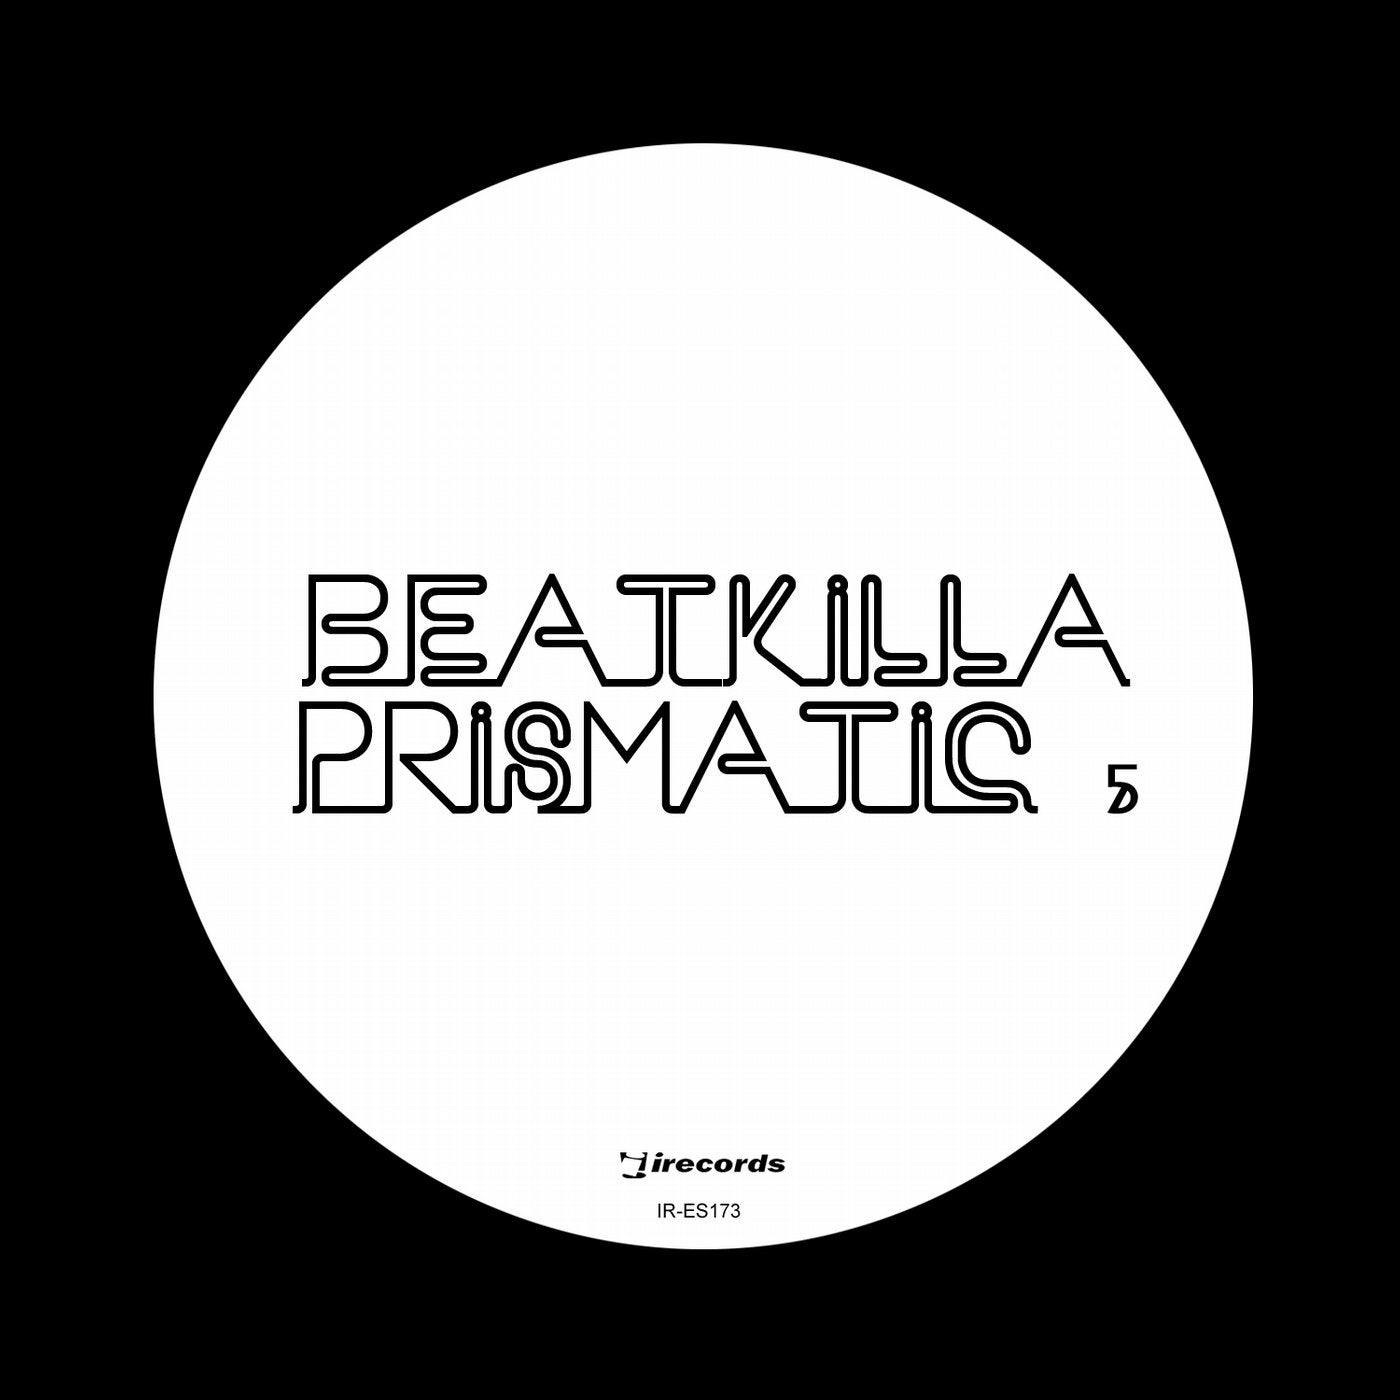 Beatkilla Prismatic 5